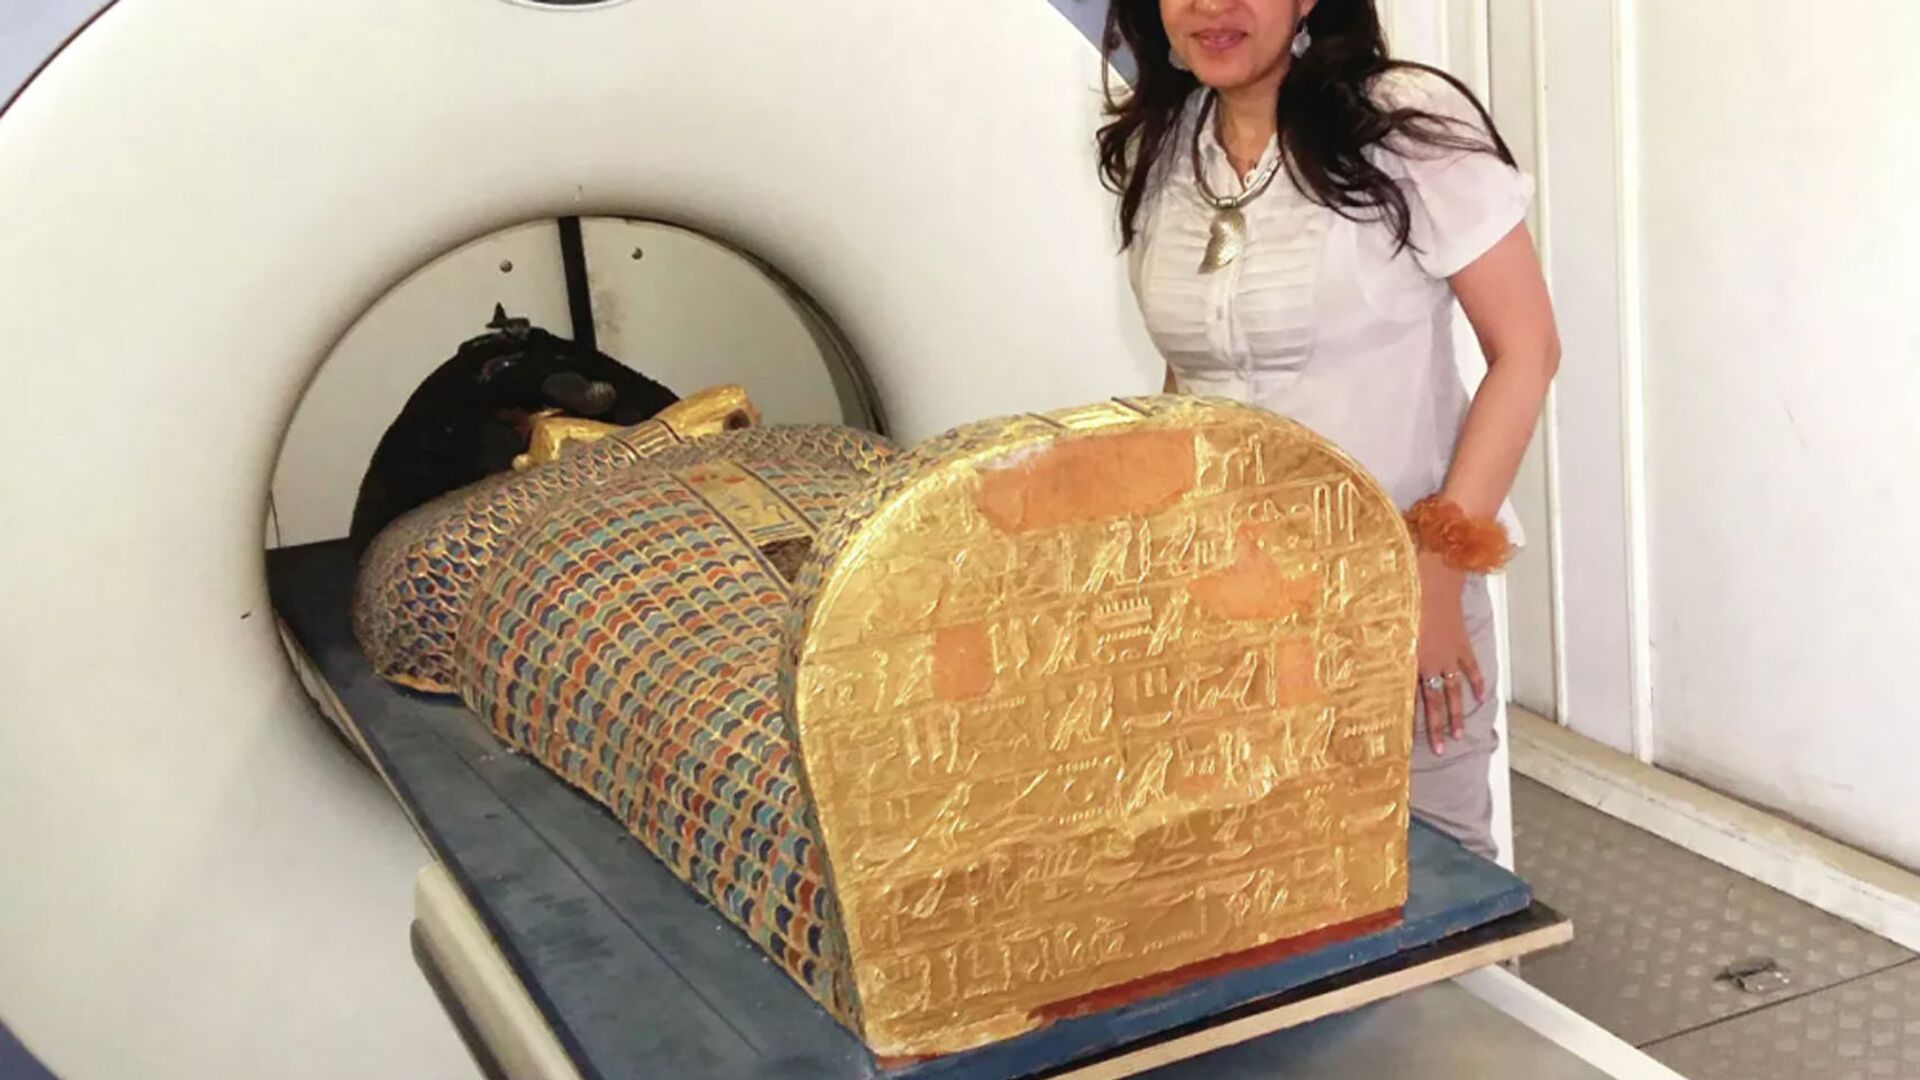 Faraono Sekenenro Taa II mumijos kompiuterinę tomografiją atlieka dr. Sahar Salim - Sputnik Lietuva, 1920, 21.02.2021